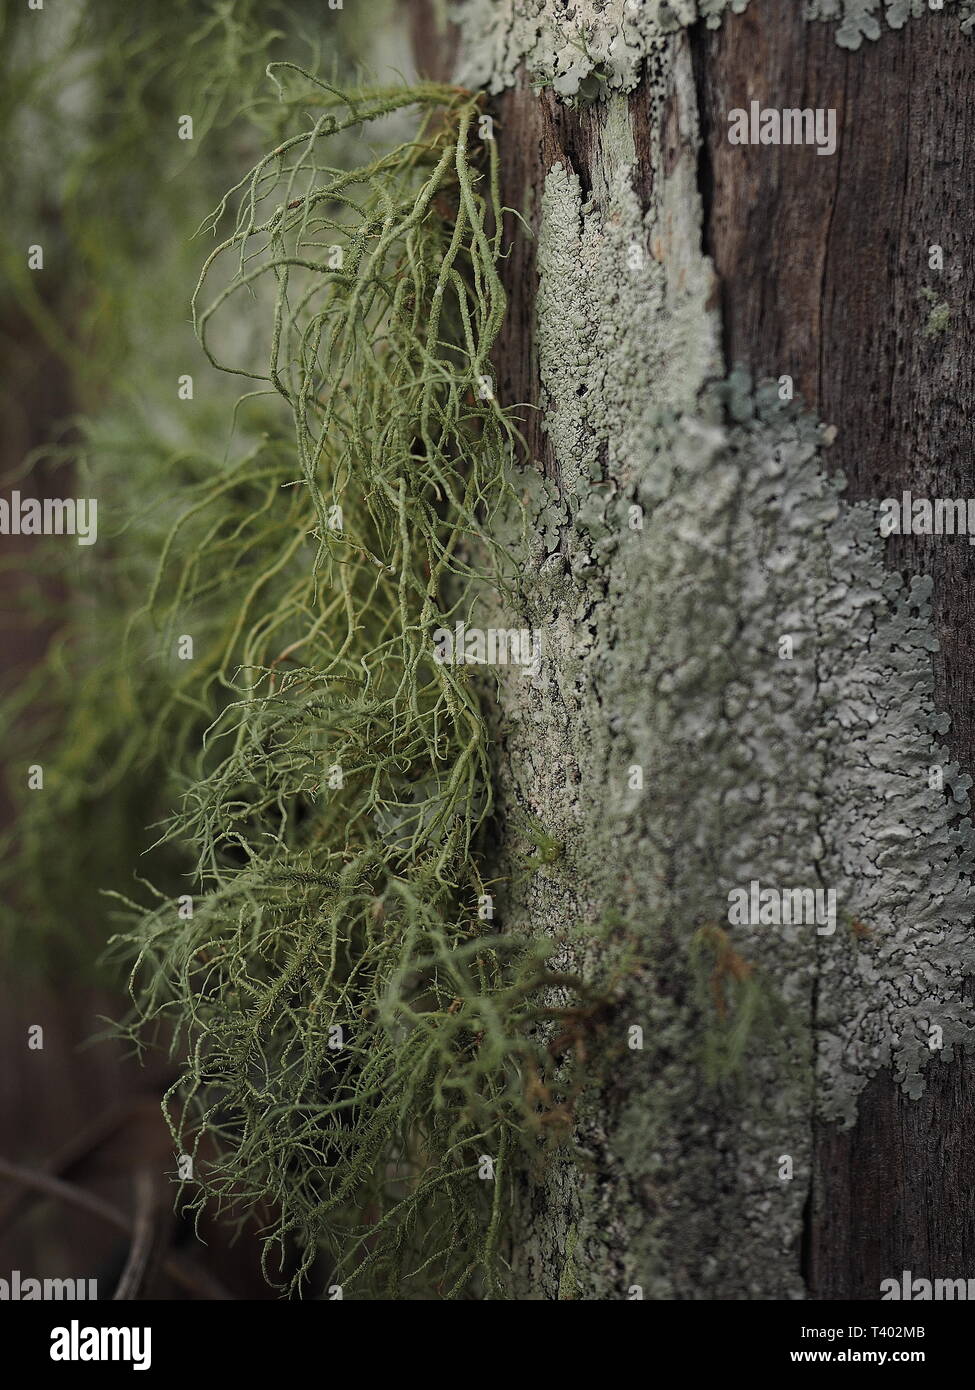 Lichen. Lichen growing in the wild, natural environment. Stock Photo